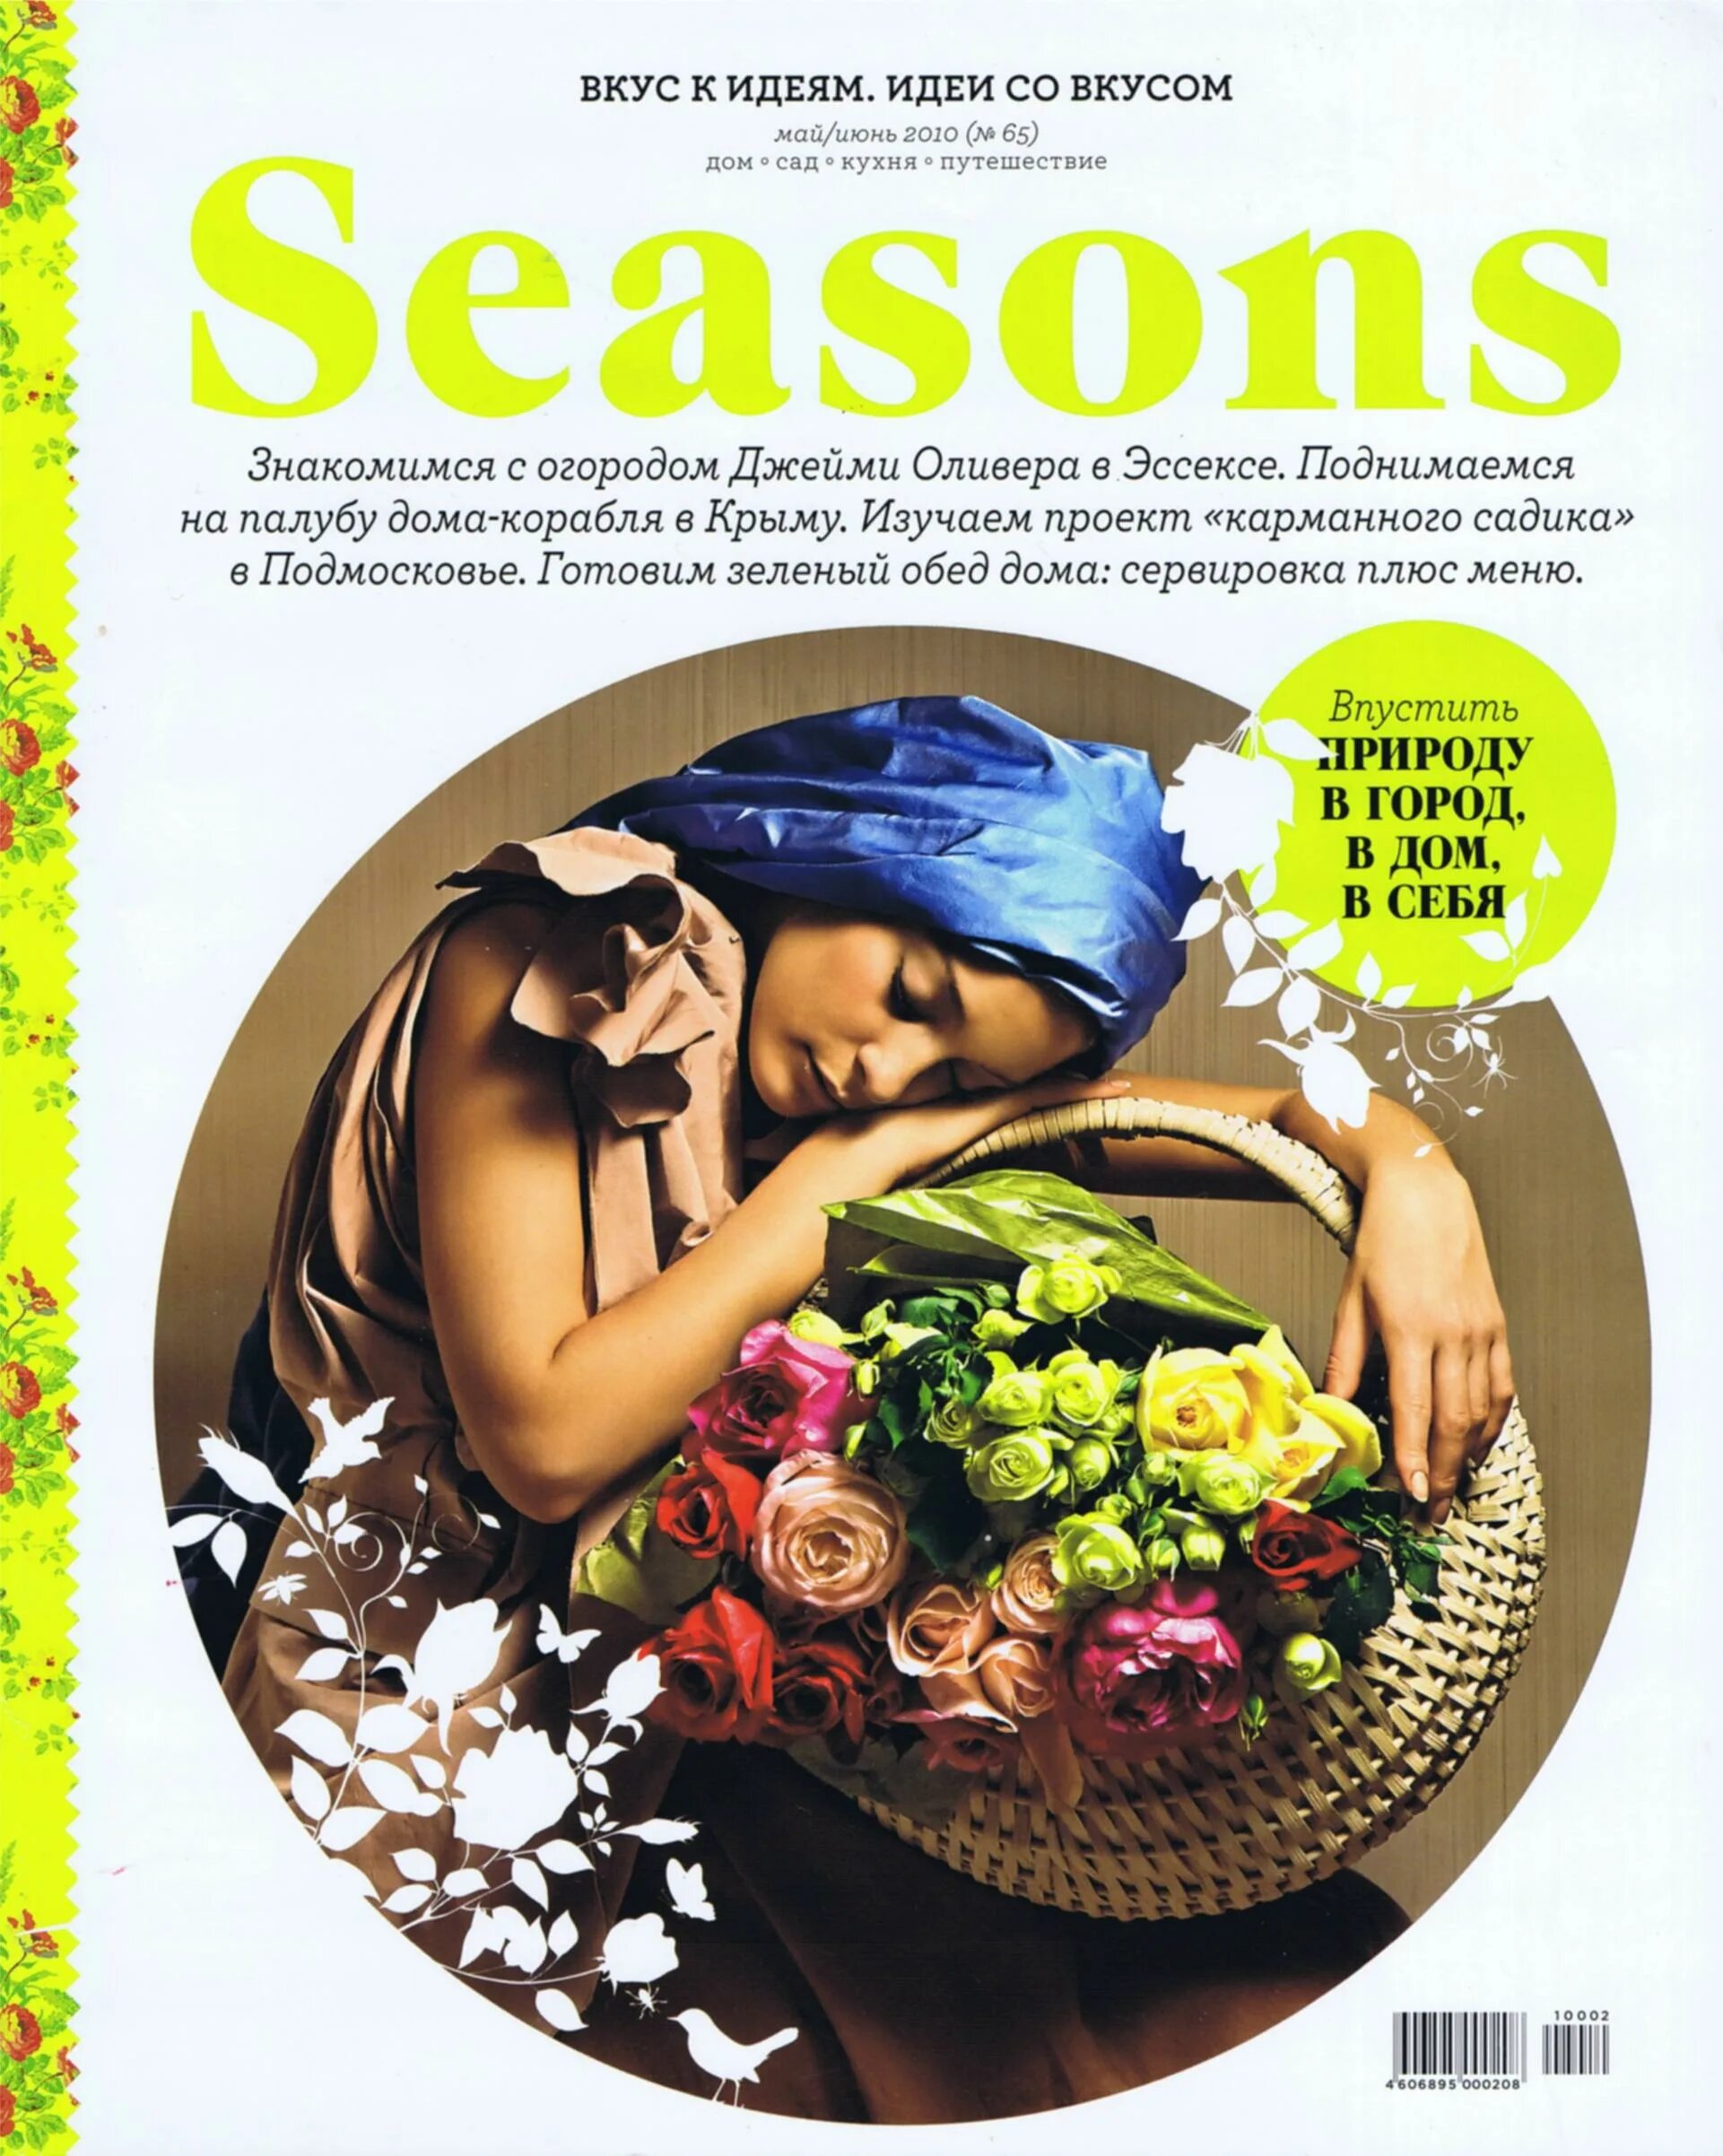 Seasons журнал. Seasons журнал обложки. Seasons of Life журнал.